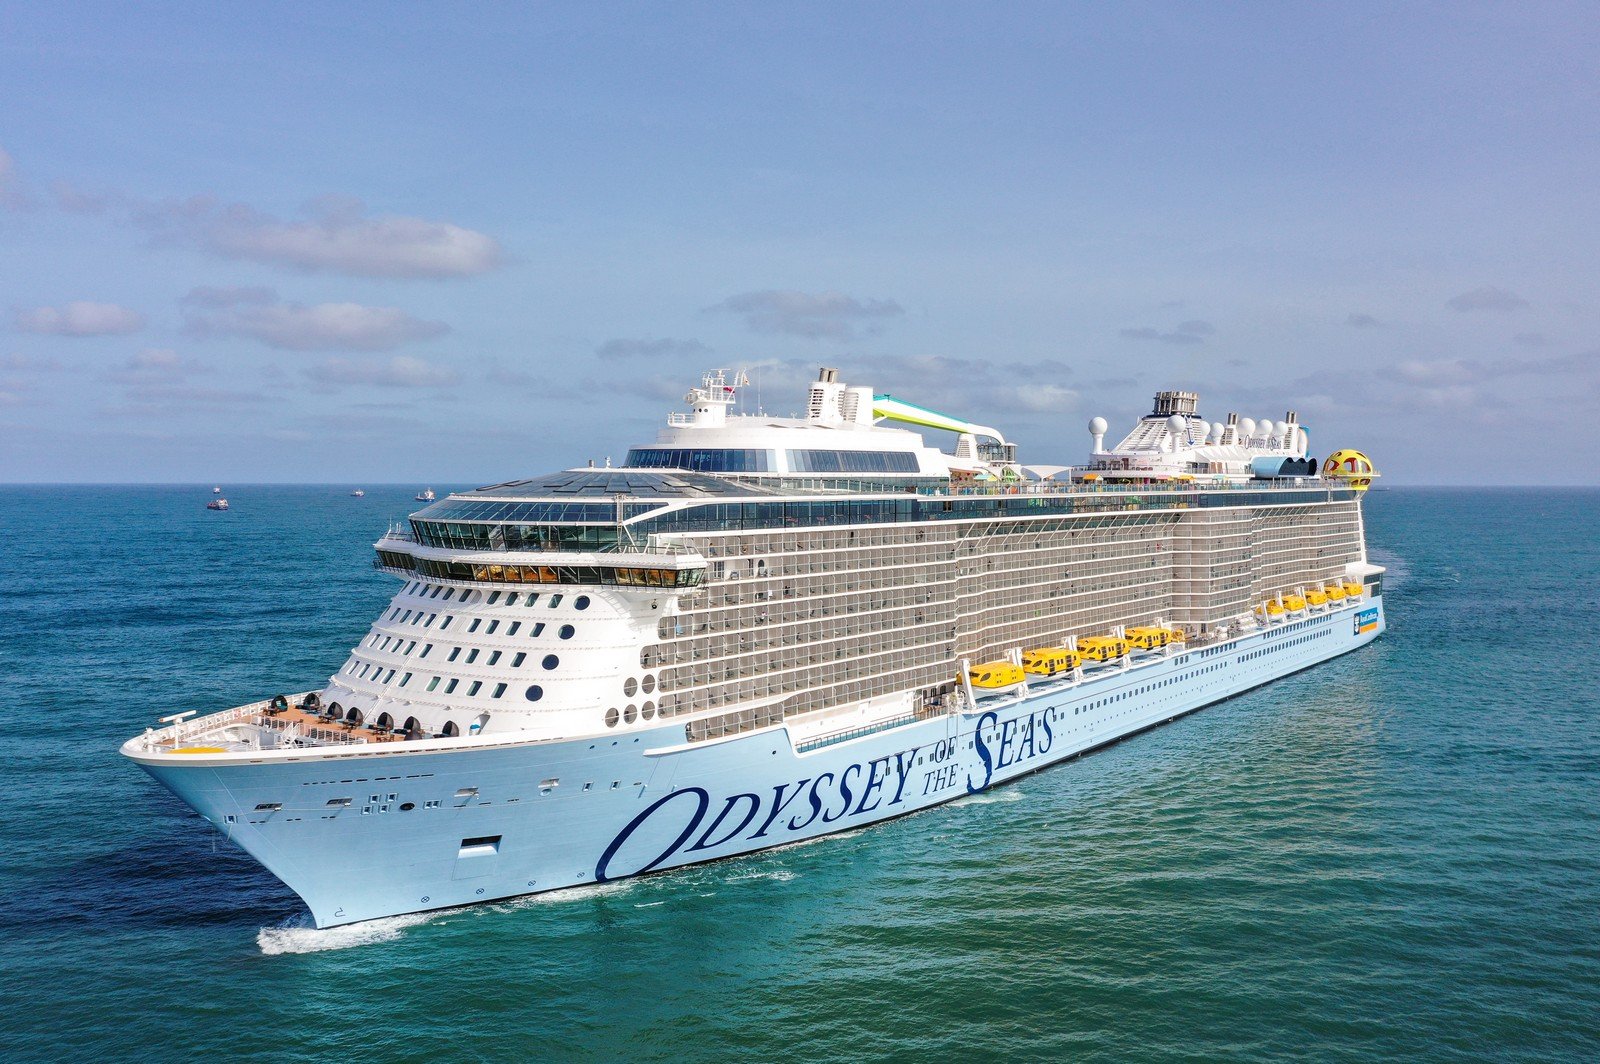 Odyssey of the Seas | Royal Caribbean Blog